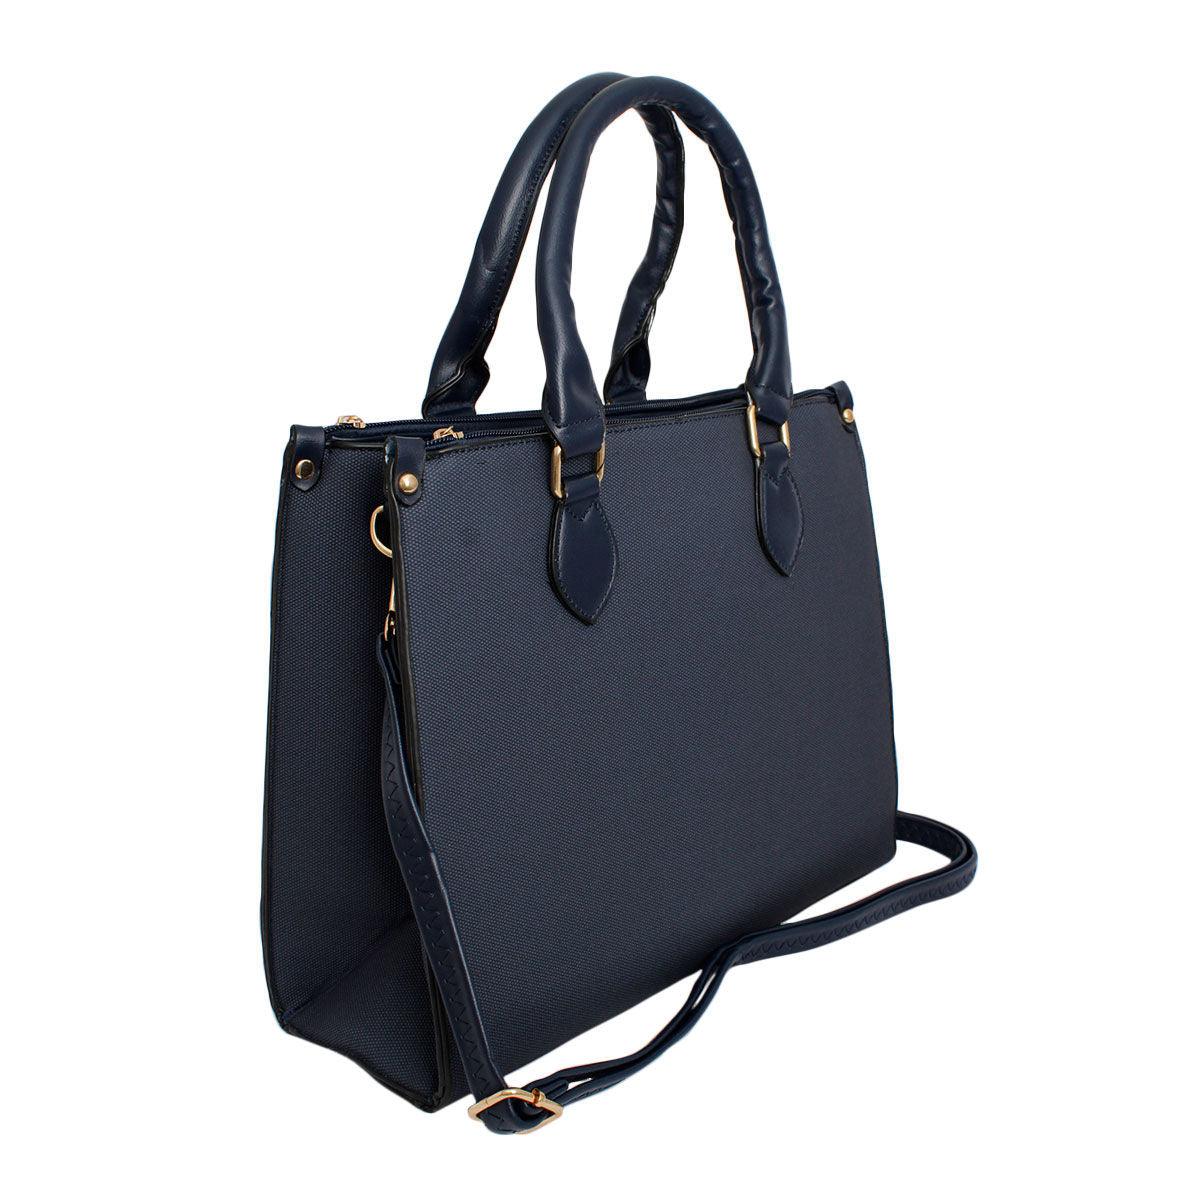 Get Noticed with Stylish Blue Granule Satchel Handbag for Women